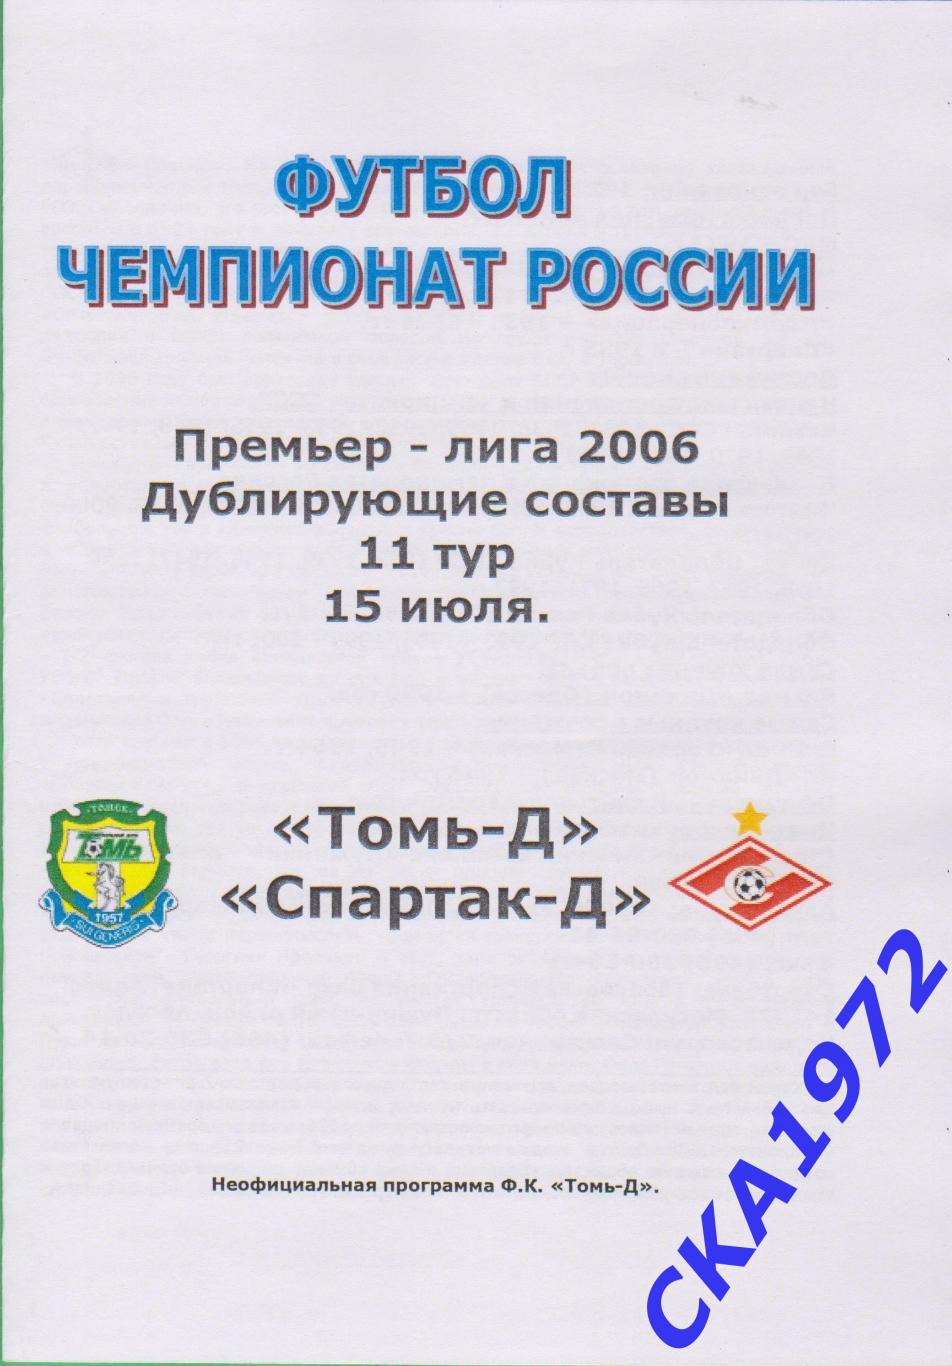 программа Томь Томск - Спартак Москва 2006 дублеры